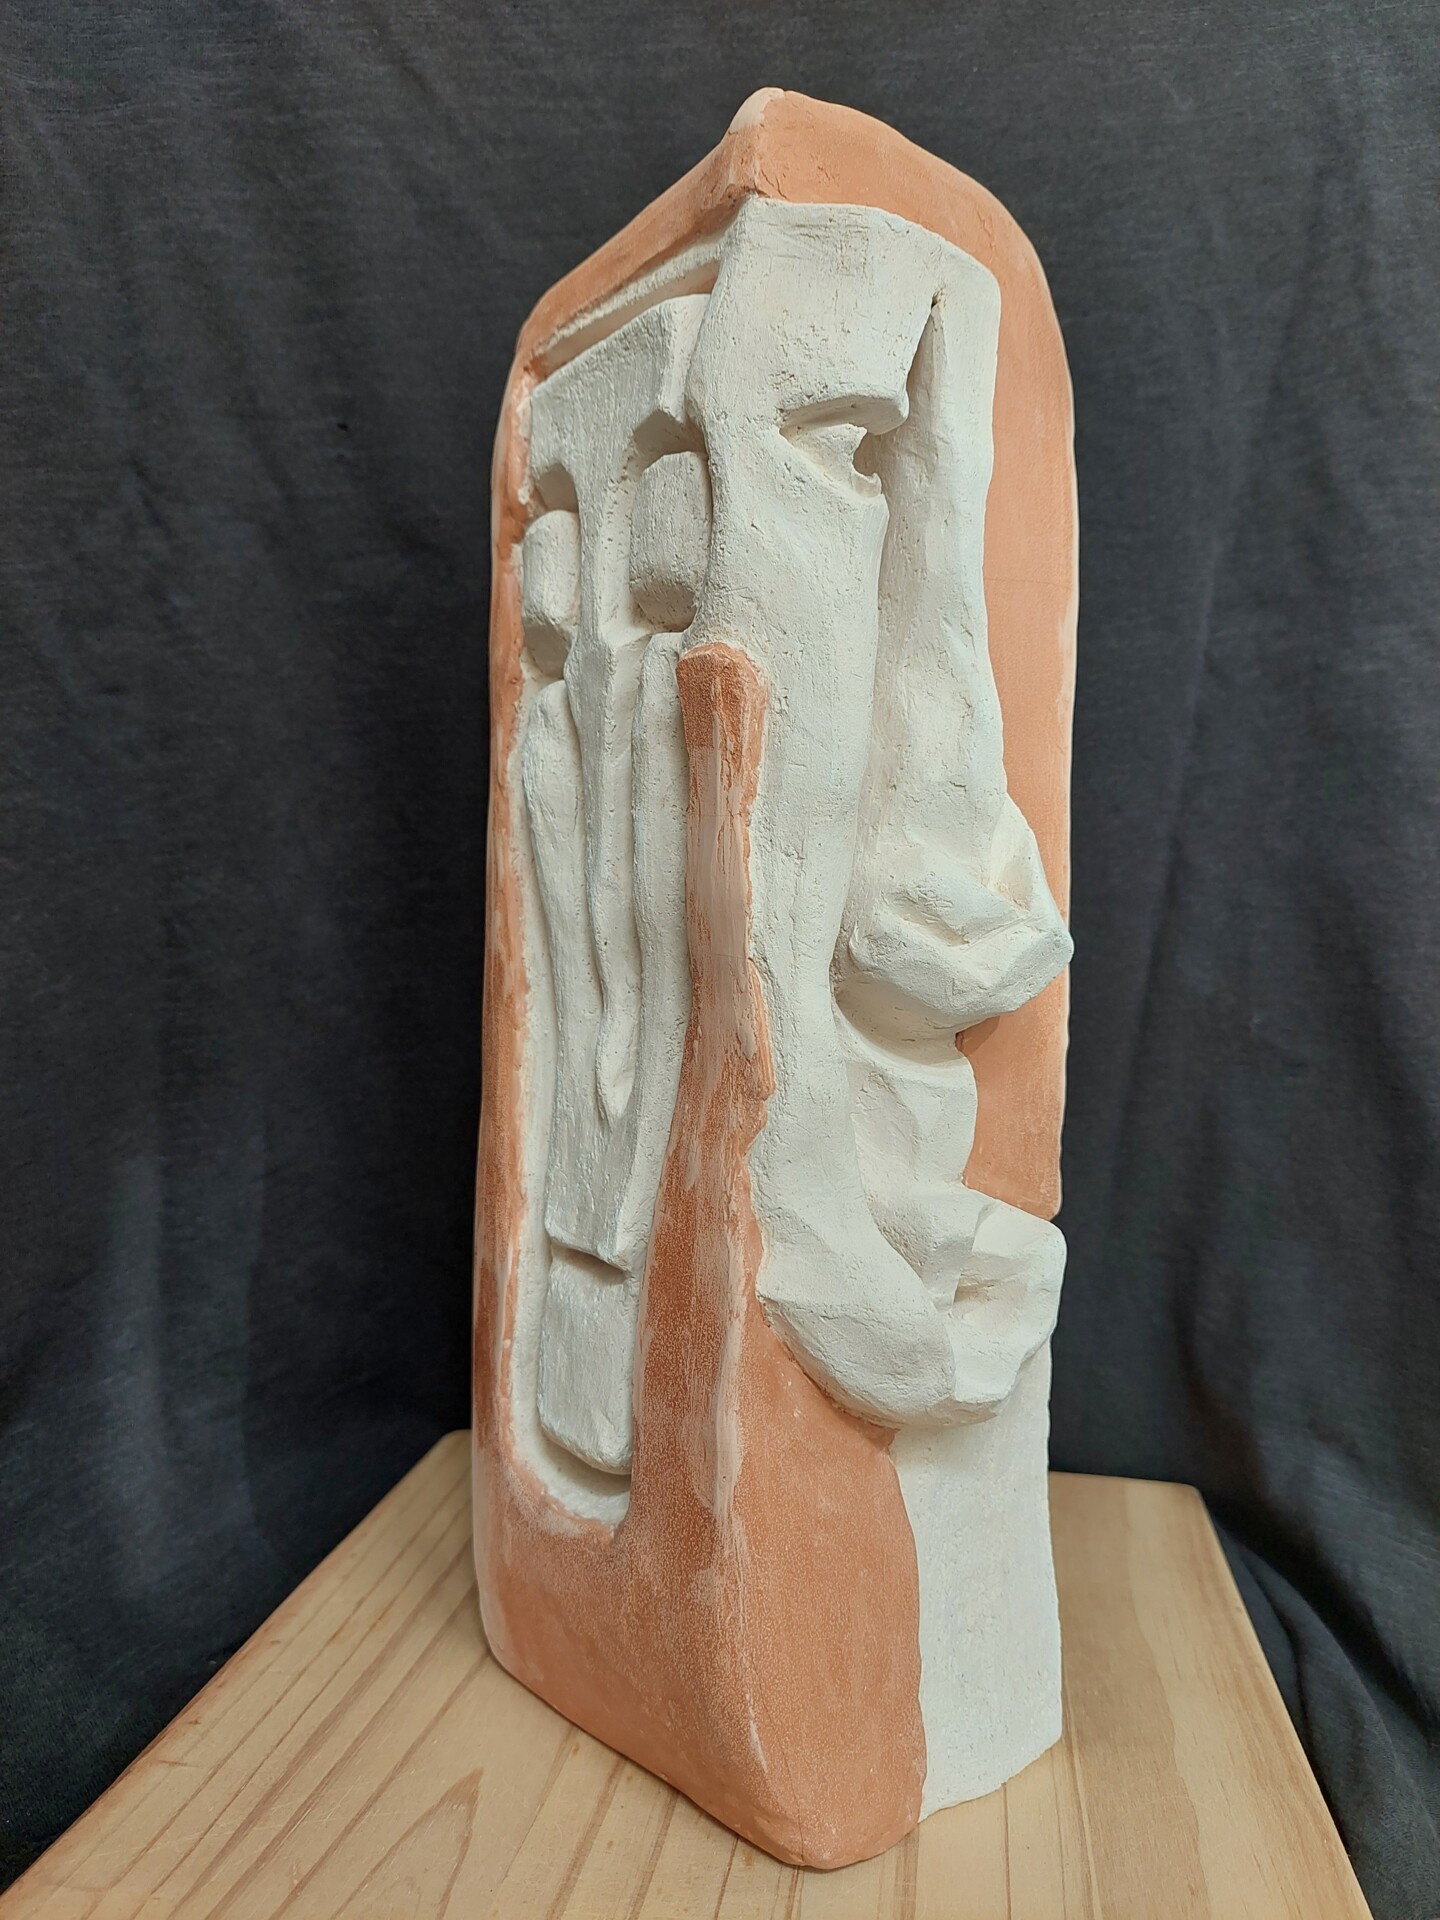 CORSE Sculpture